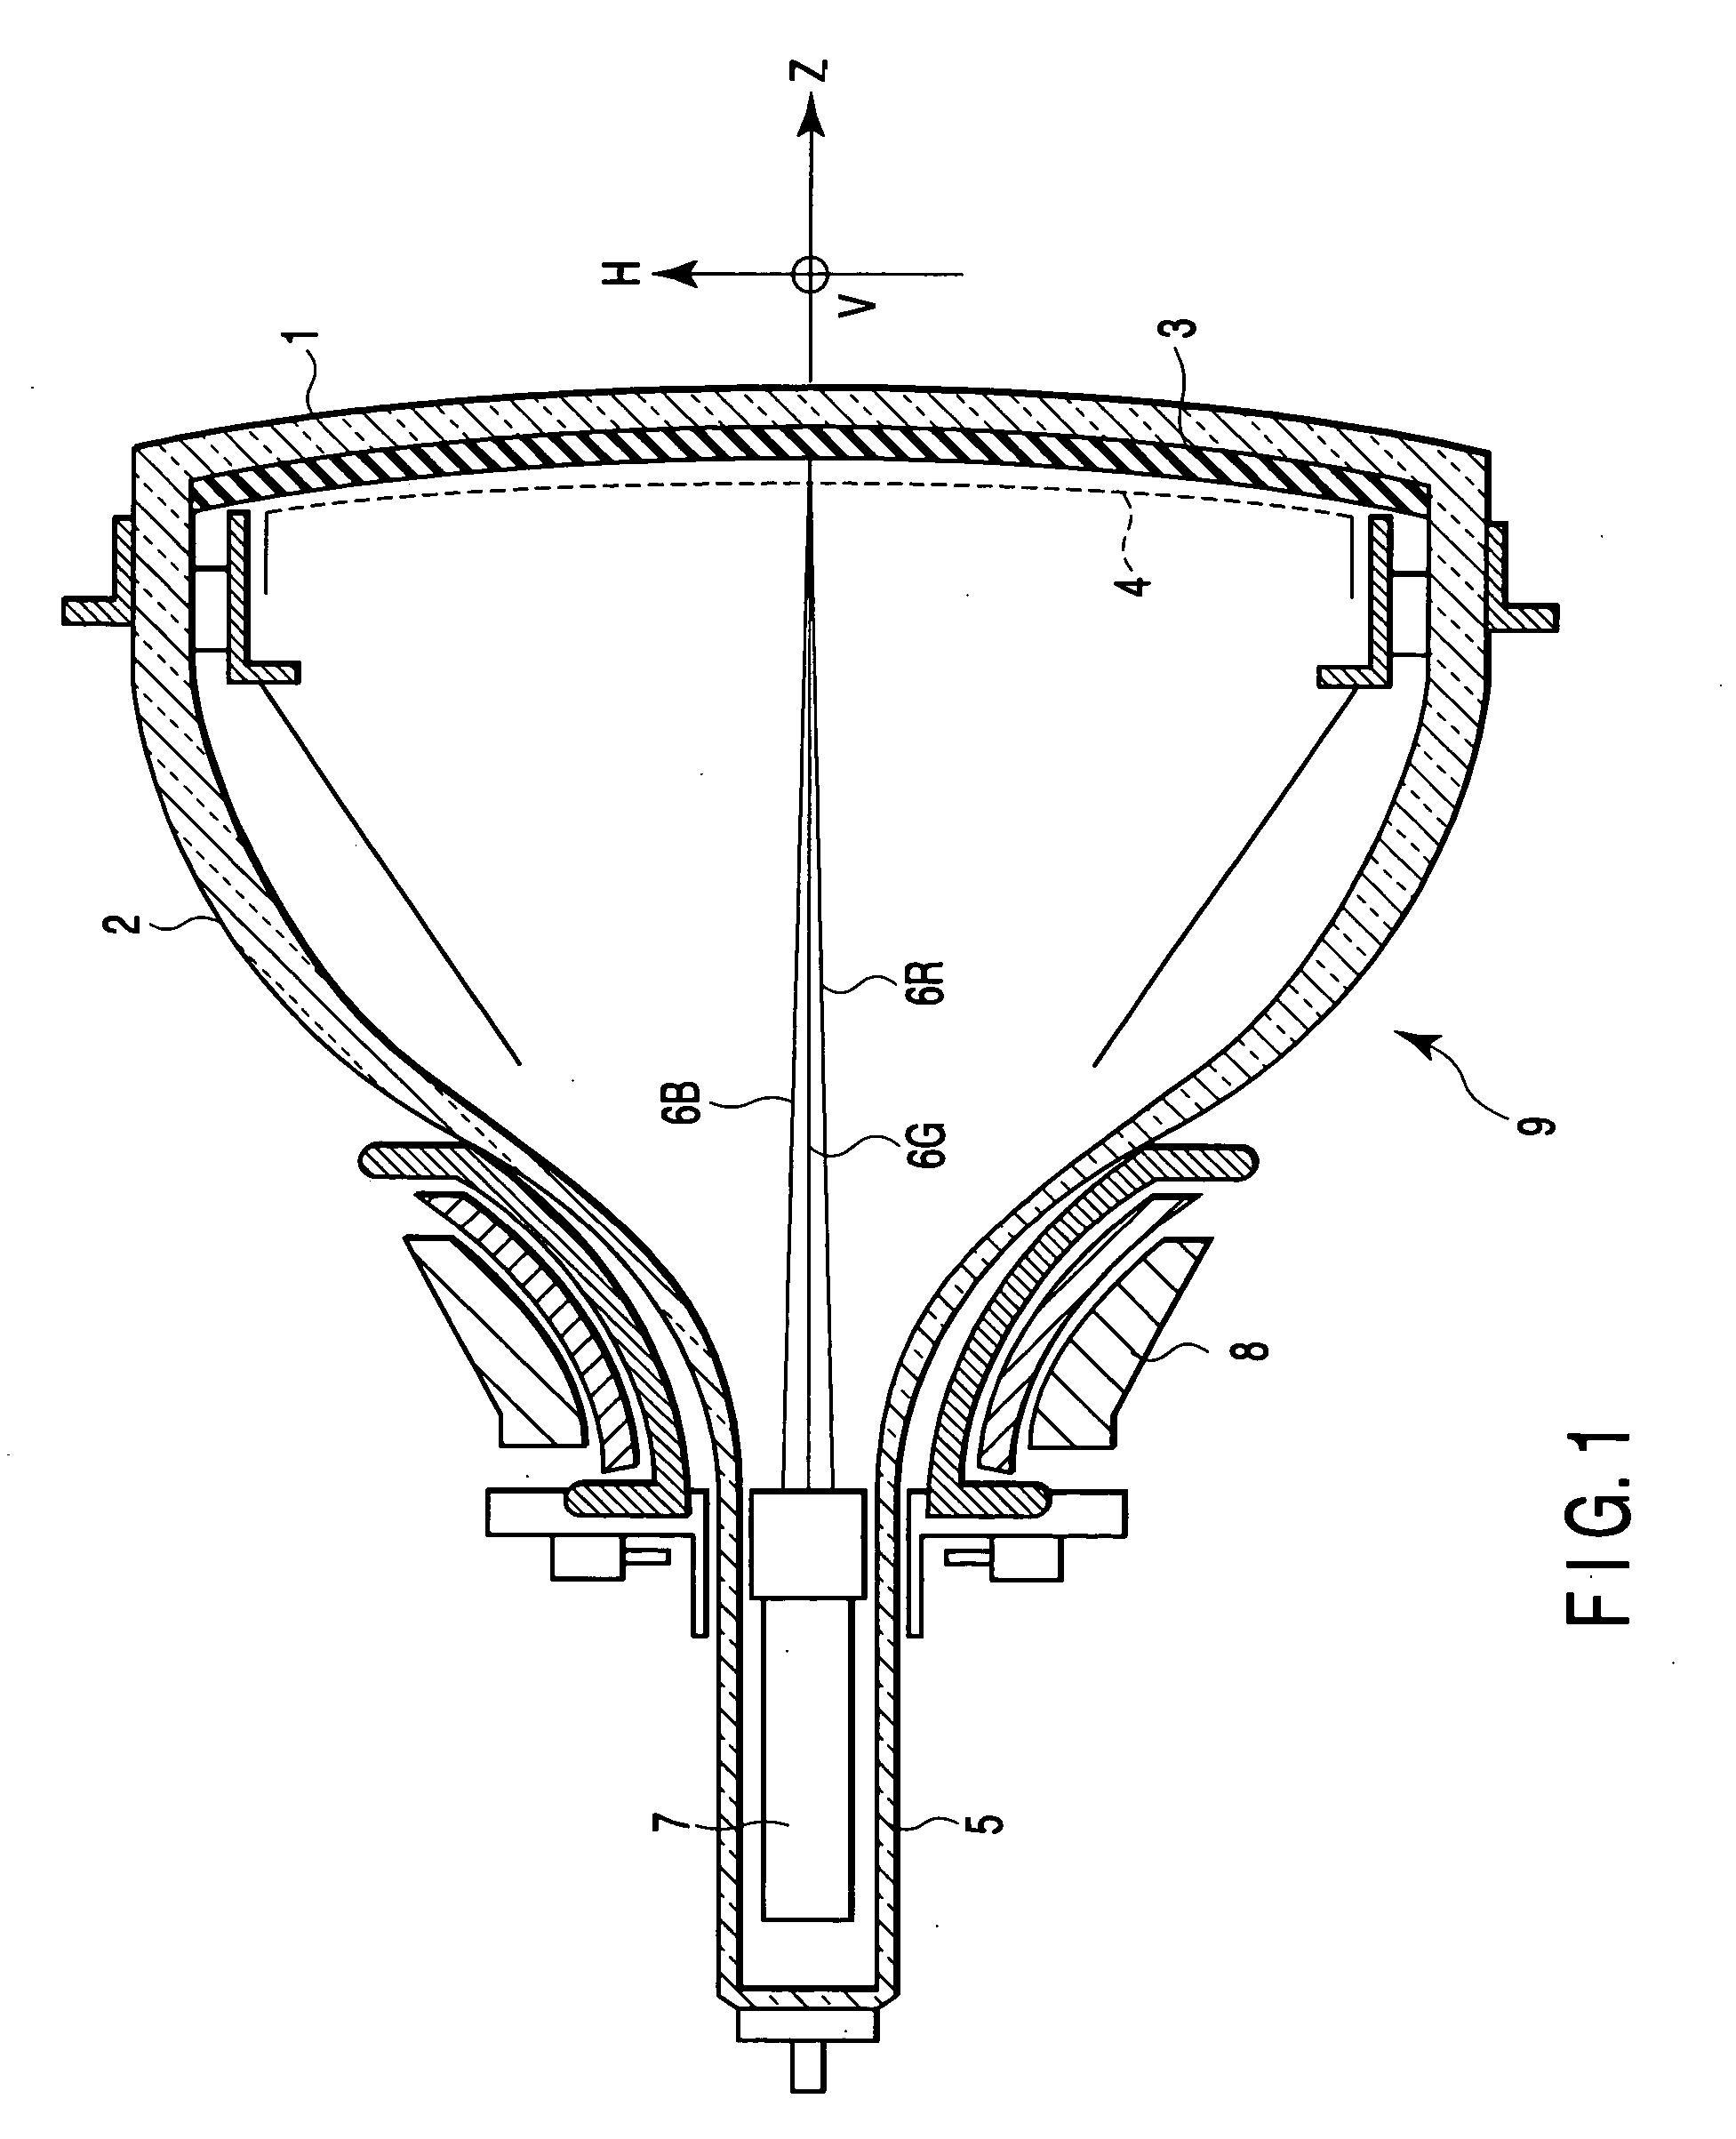 Cathode-ray tube